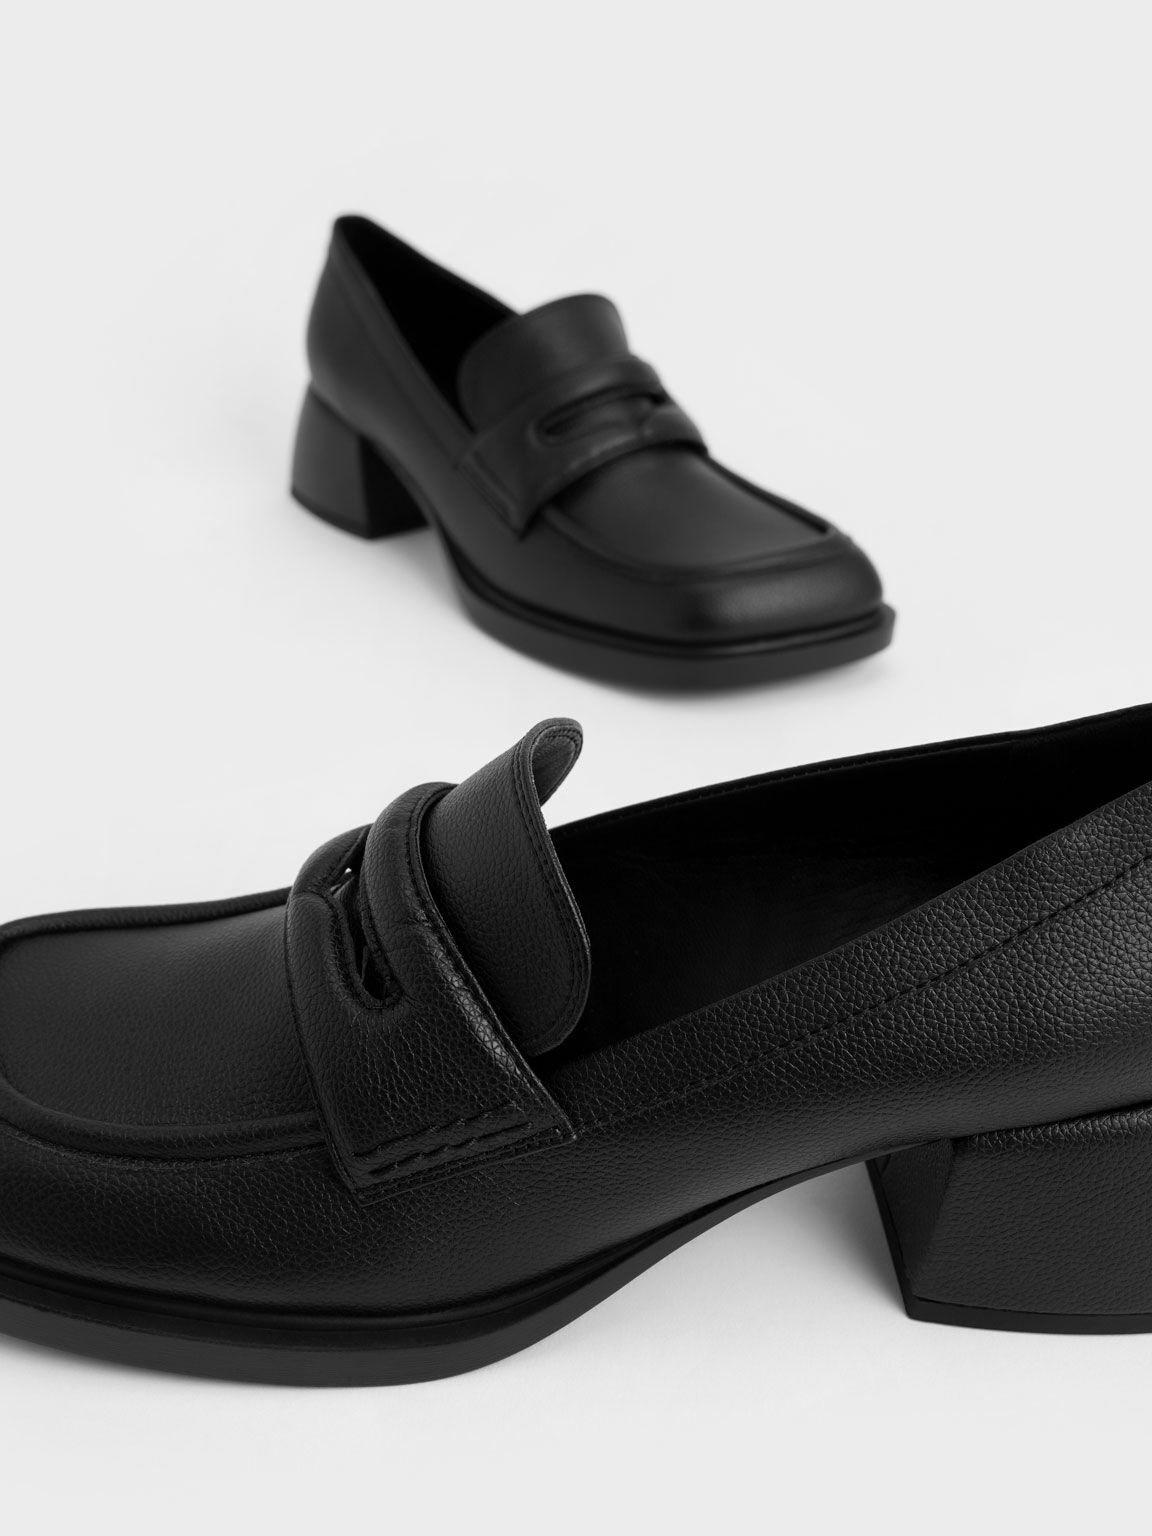 حذاء لوفر مع مقدمة شبه مربعة, أسود, hi-res